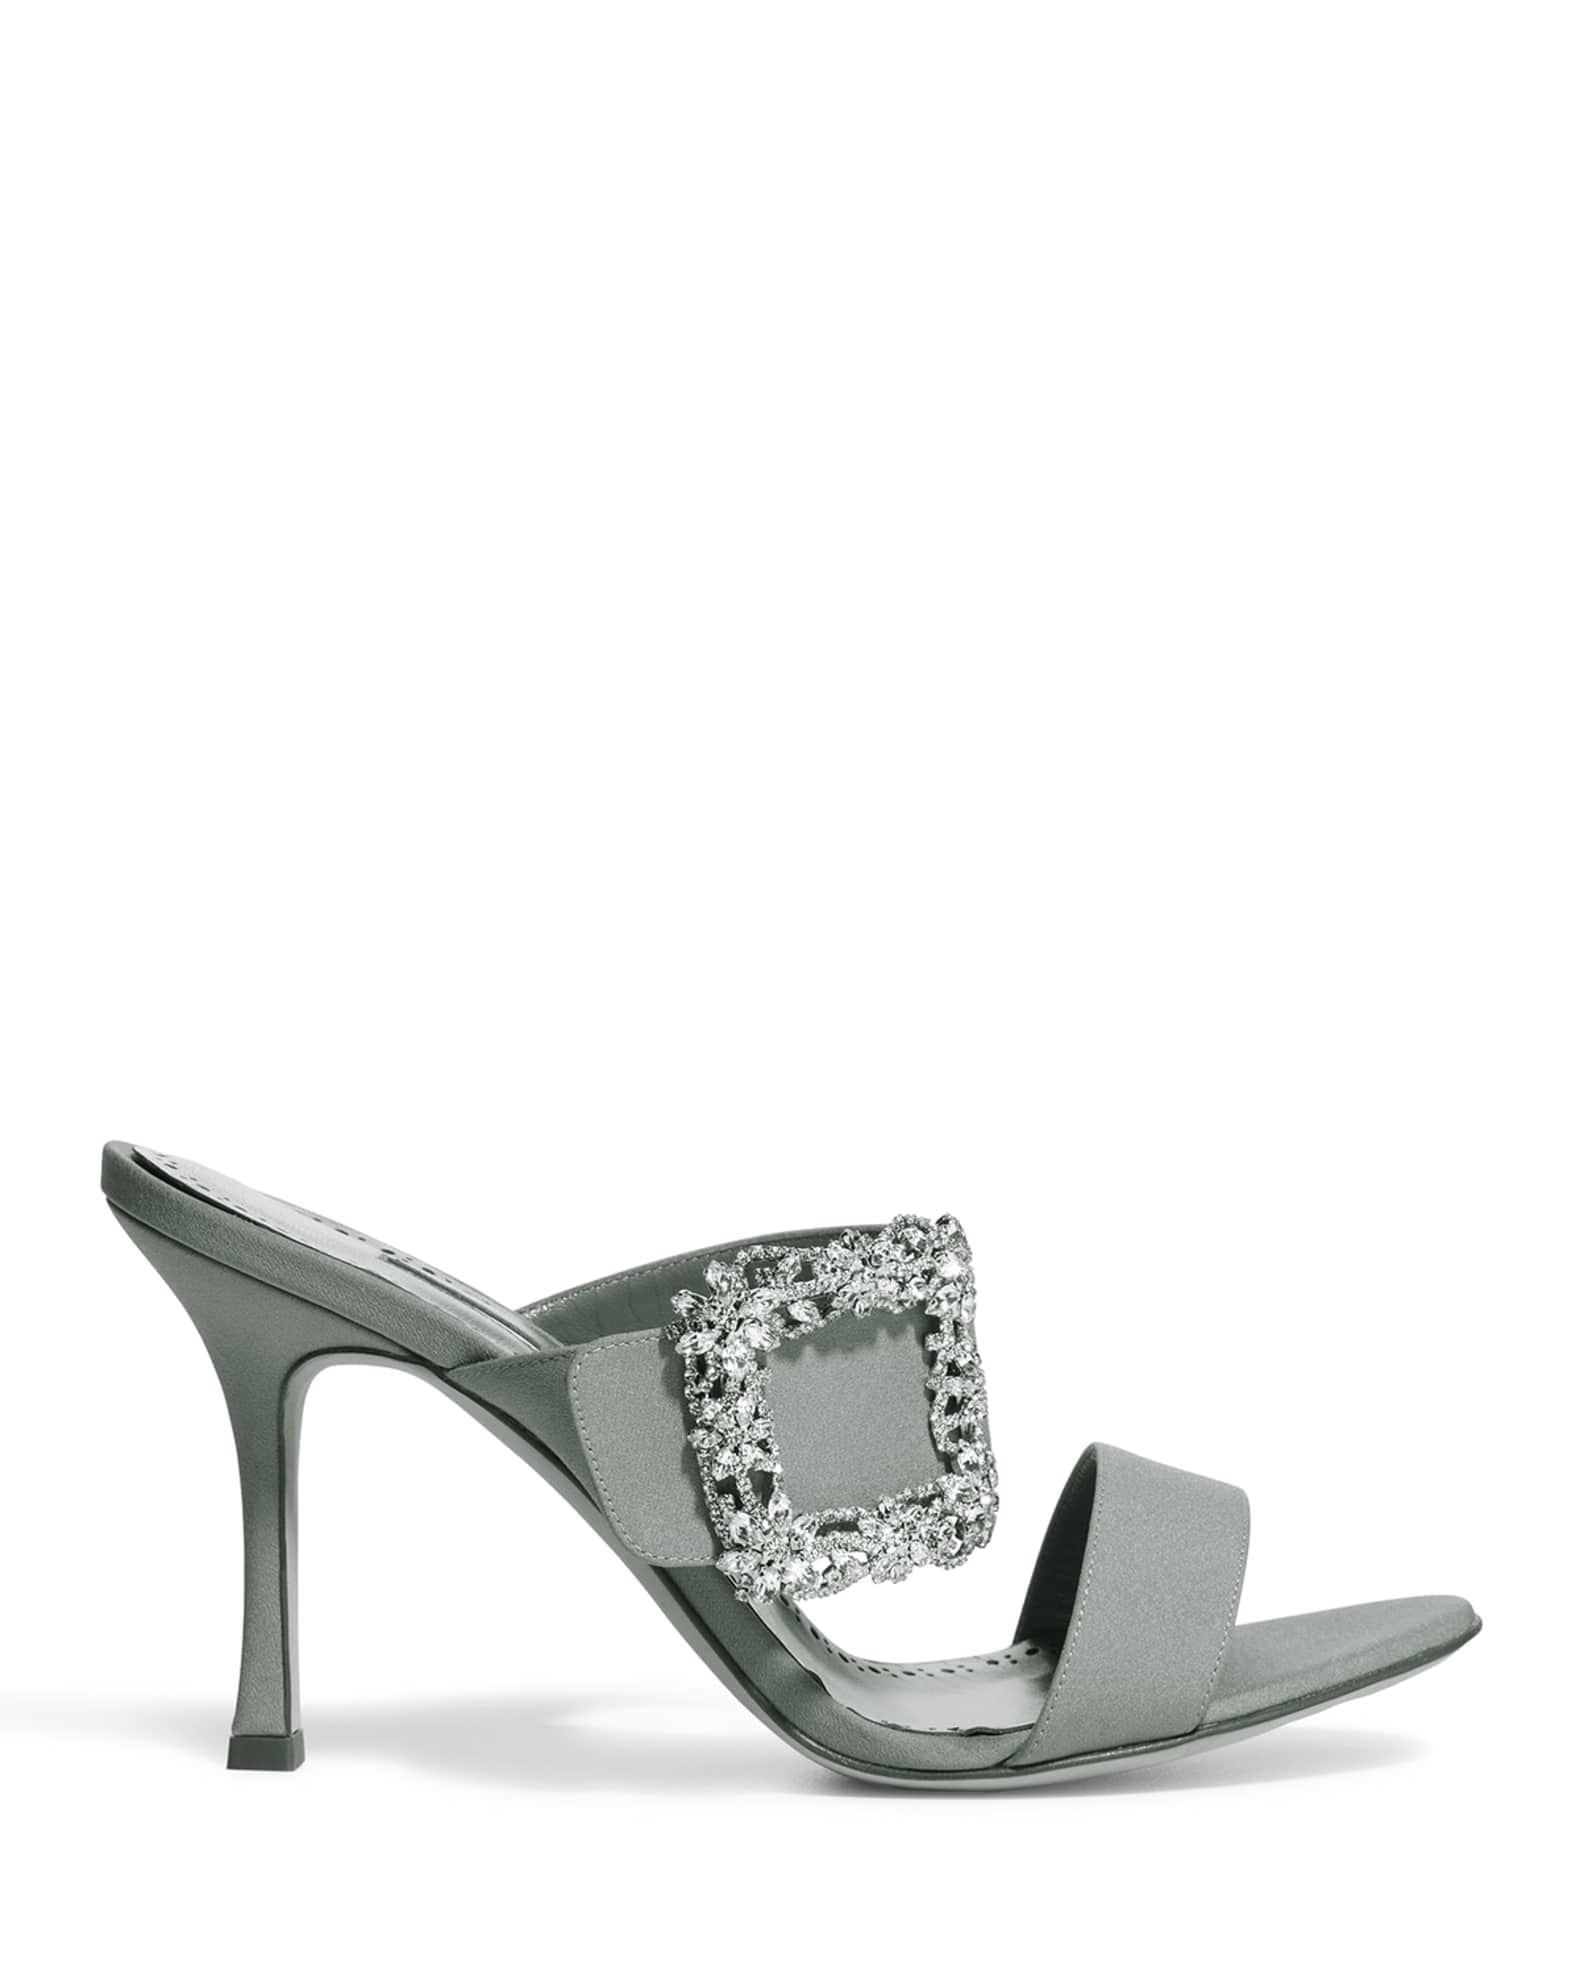 Manolo Blahnik Gable Crystal Buckle Slide Sandals | Neiman Marcus